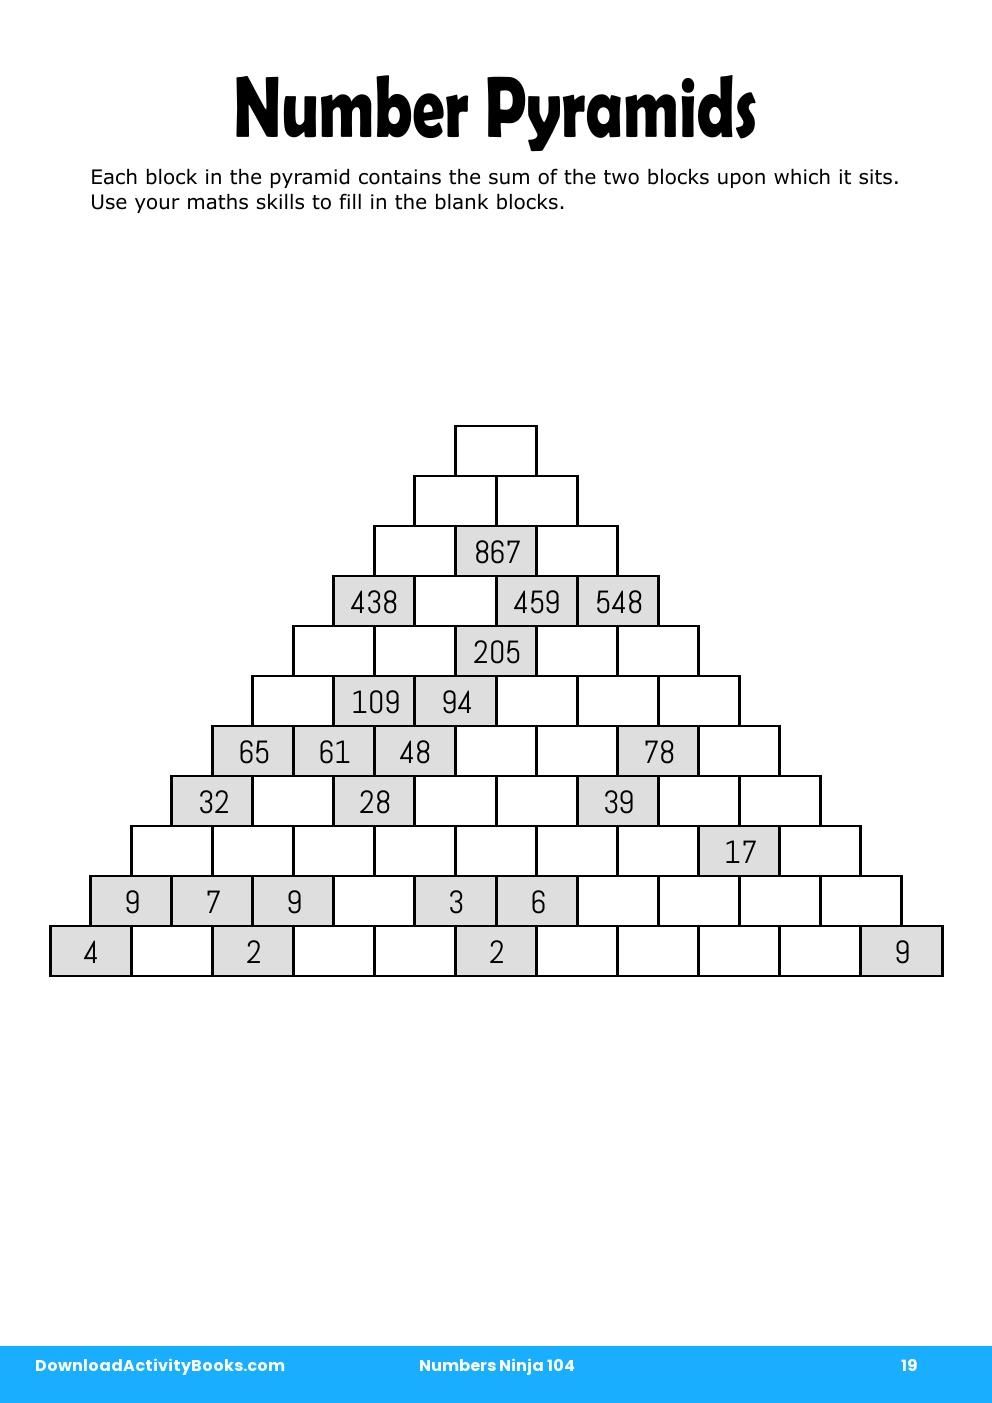 Number Pyramids in Numbers Ninja 104